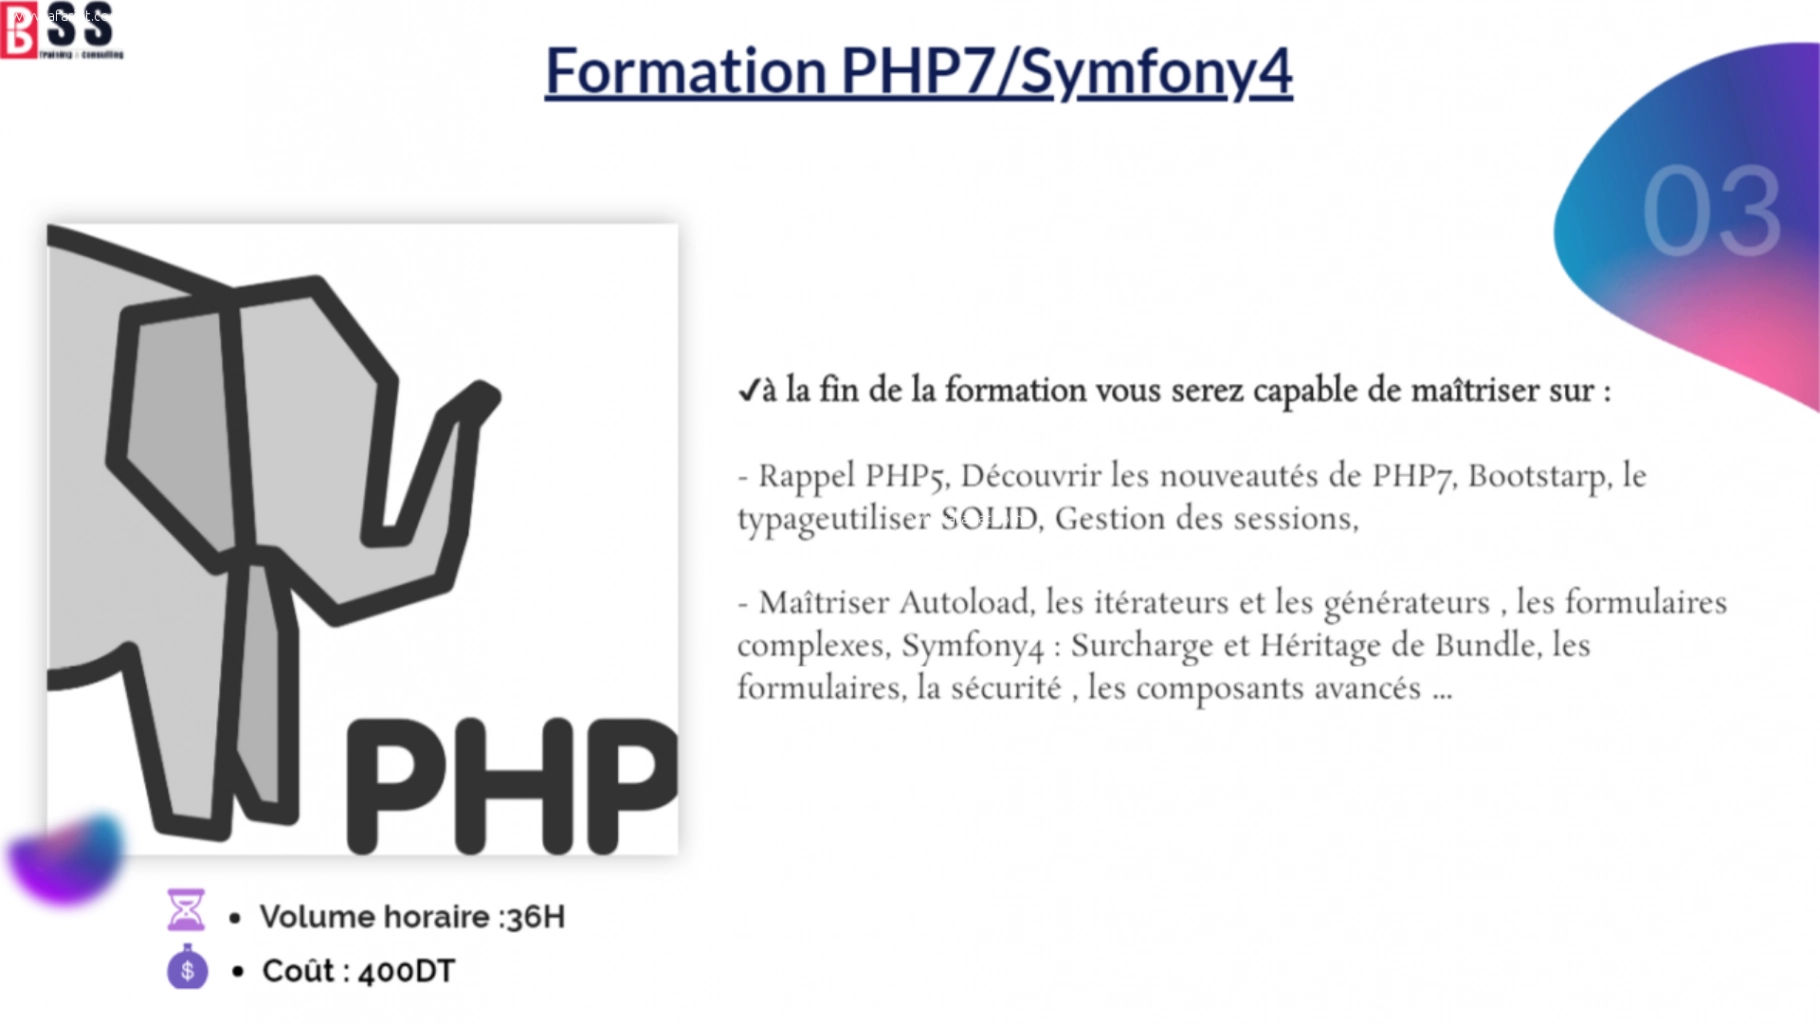 Développeur PHP7/Symfony4